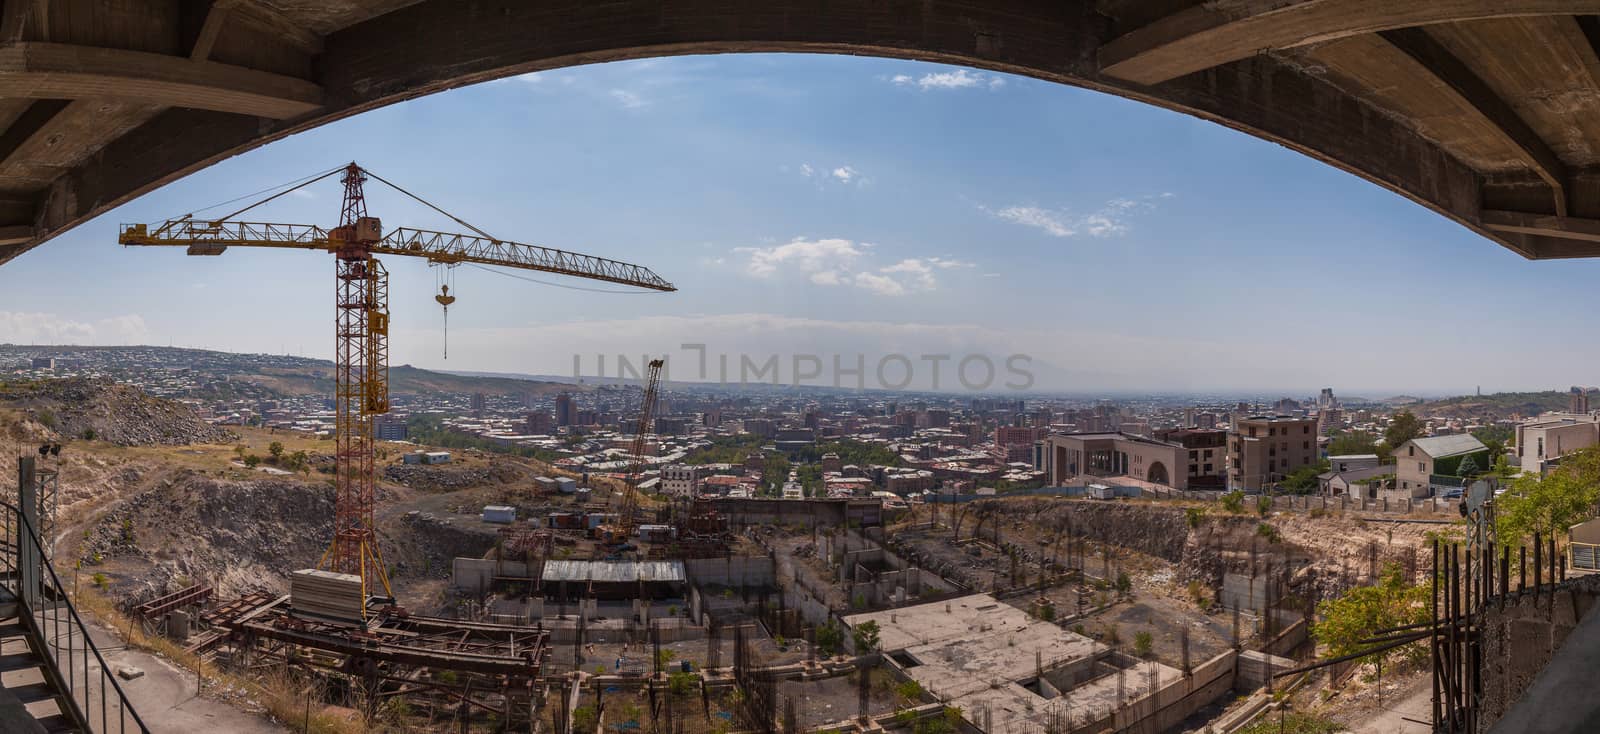 View of the city of Yerevan by sveter